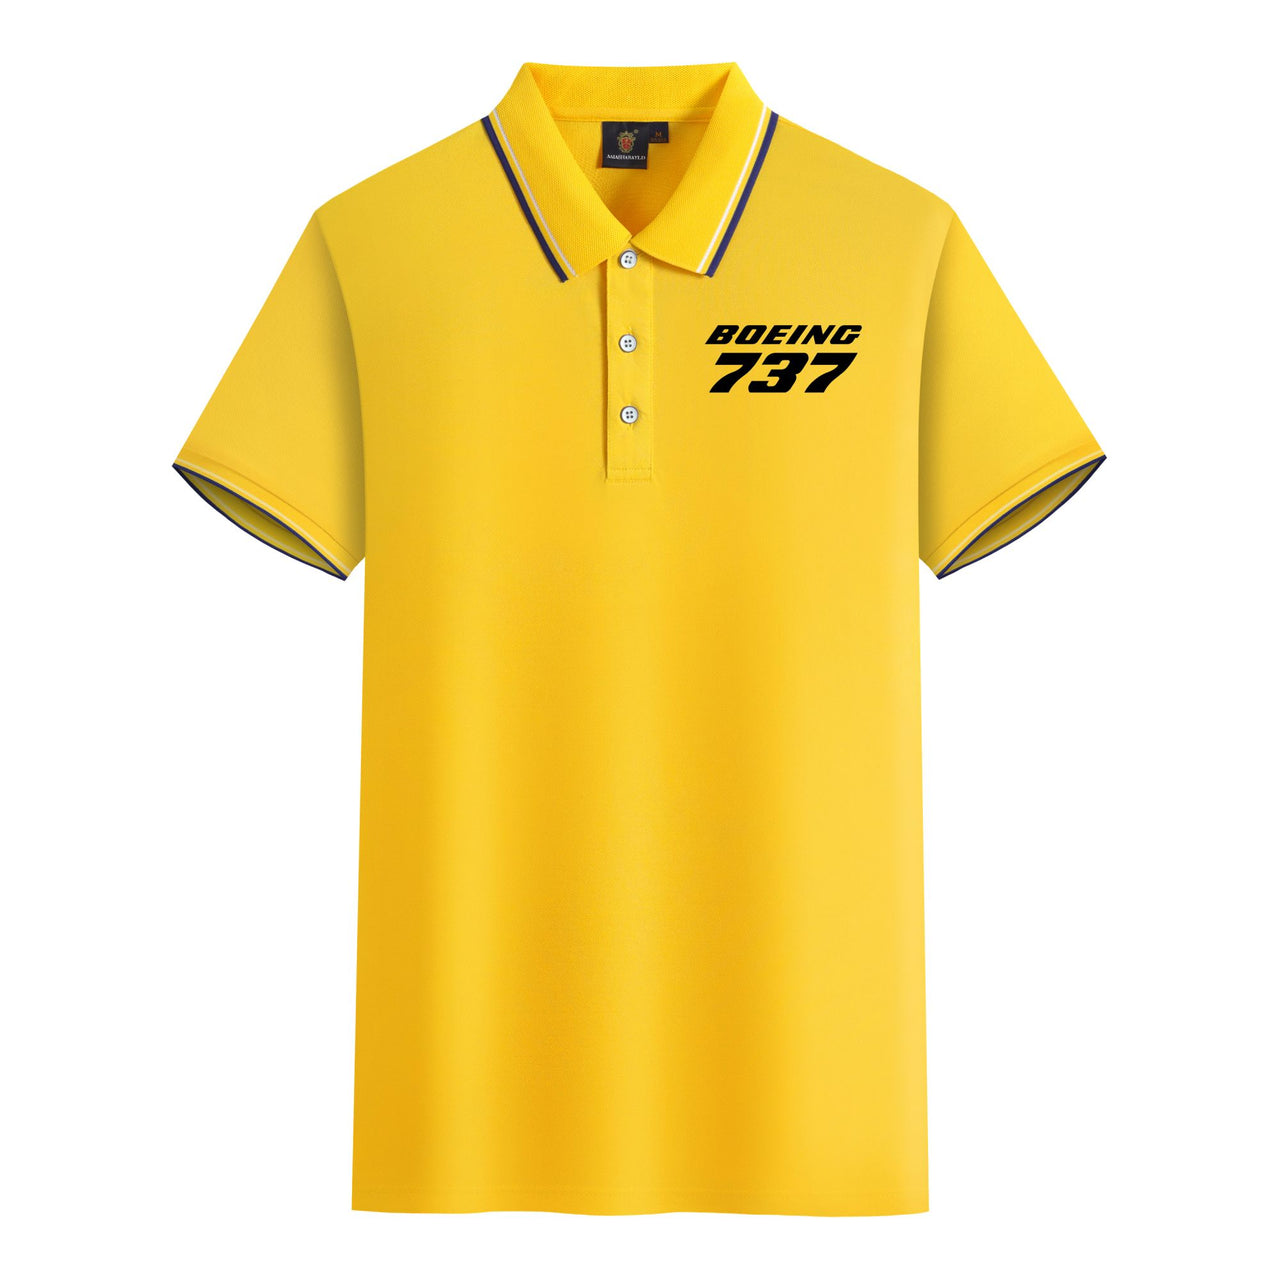 Boeing 737 & Text Designed Stylish Polo T-Shirts